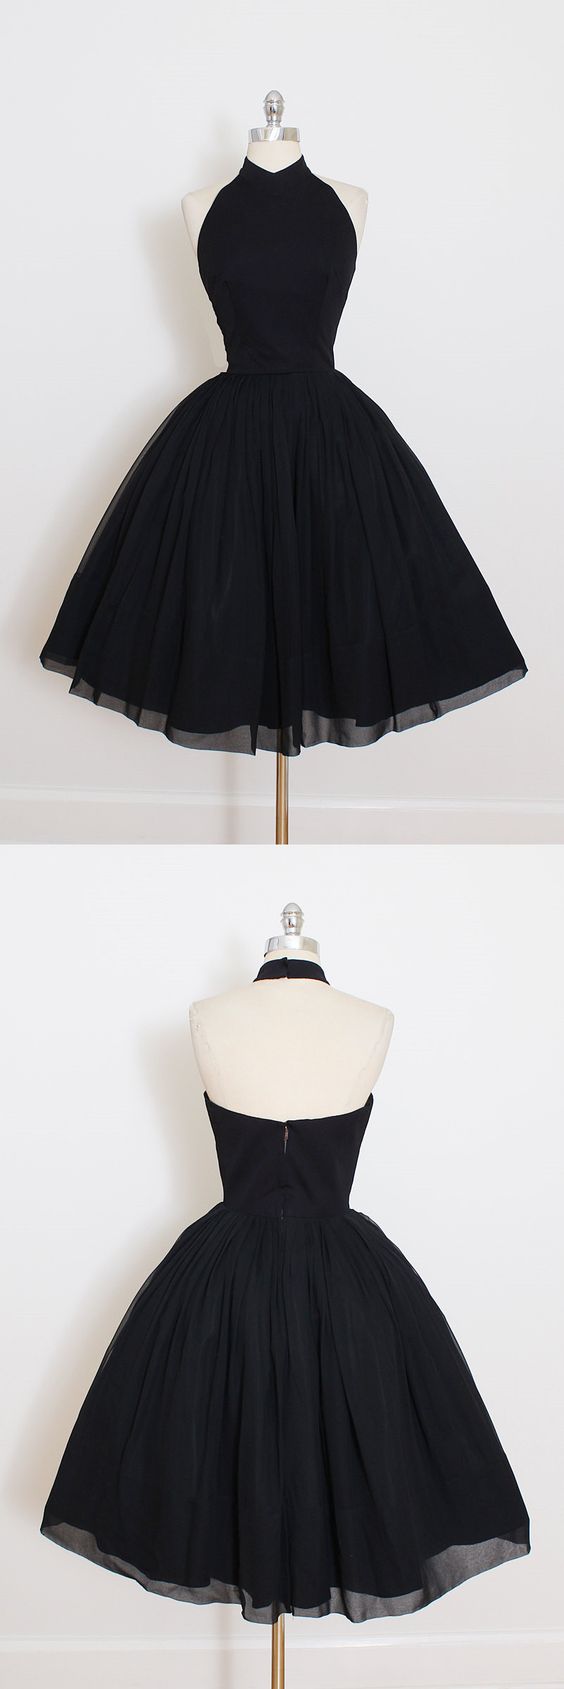 2017 Custom Made Black Chiffon Prom Dress,halter Homecoming Dress,short Mini Party Dress,high Quality